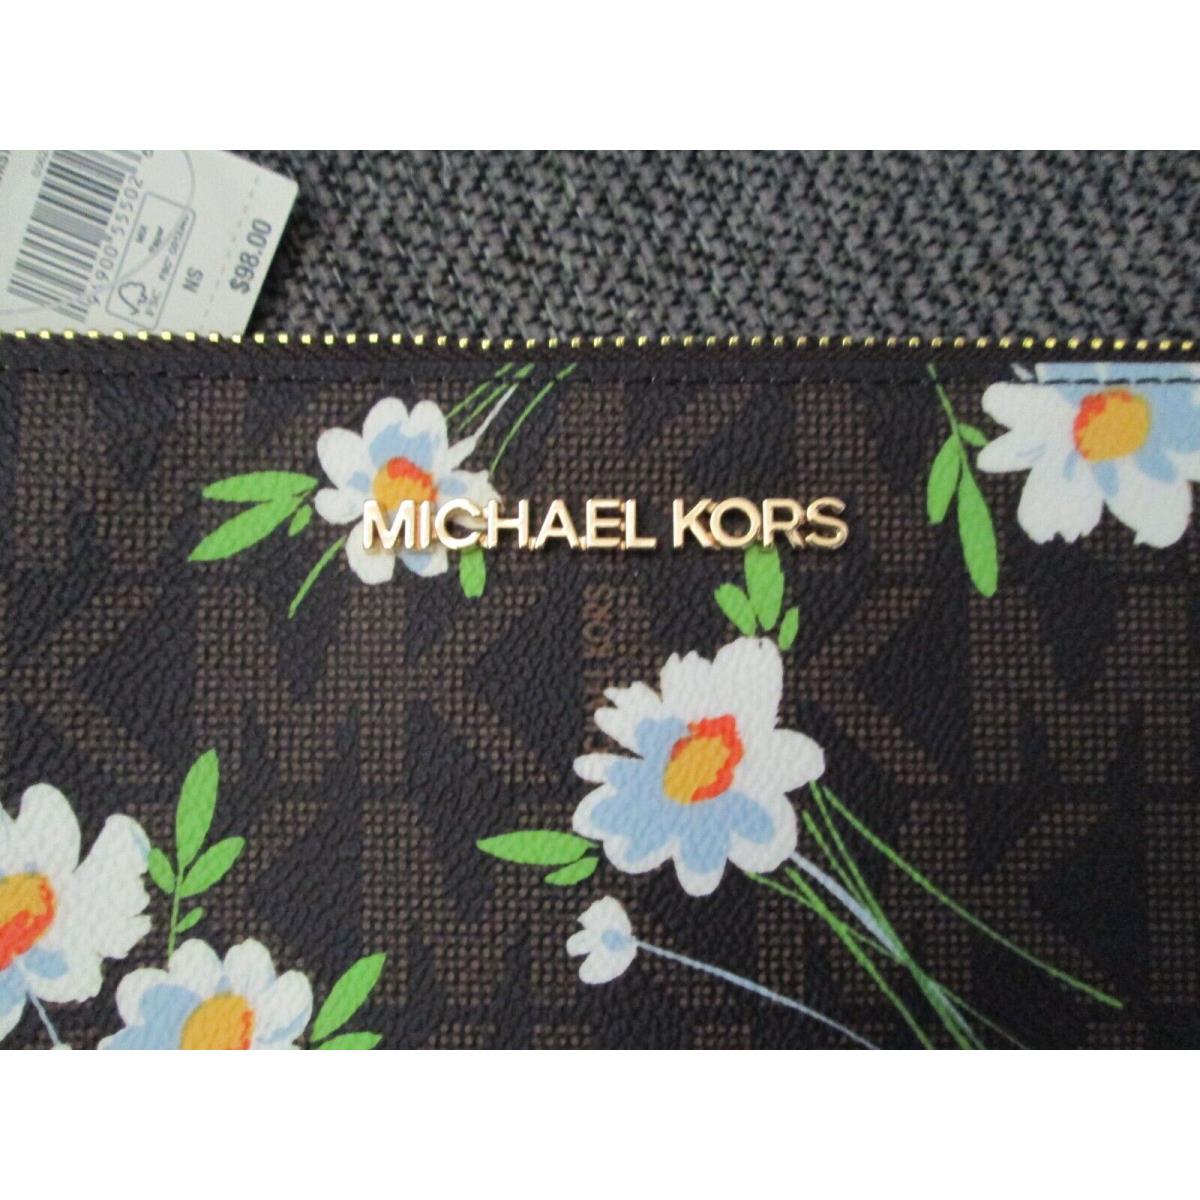 Michael Kors Jet Set Travel Large Top Zip Signature Leather Wristlet Clutch/nwt/